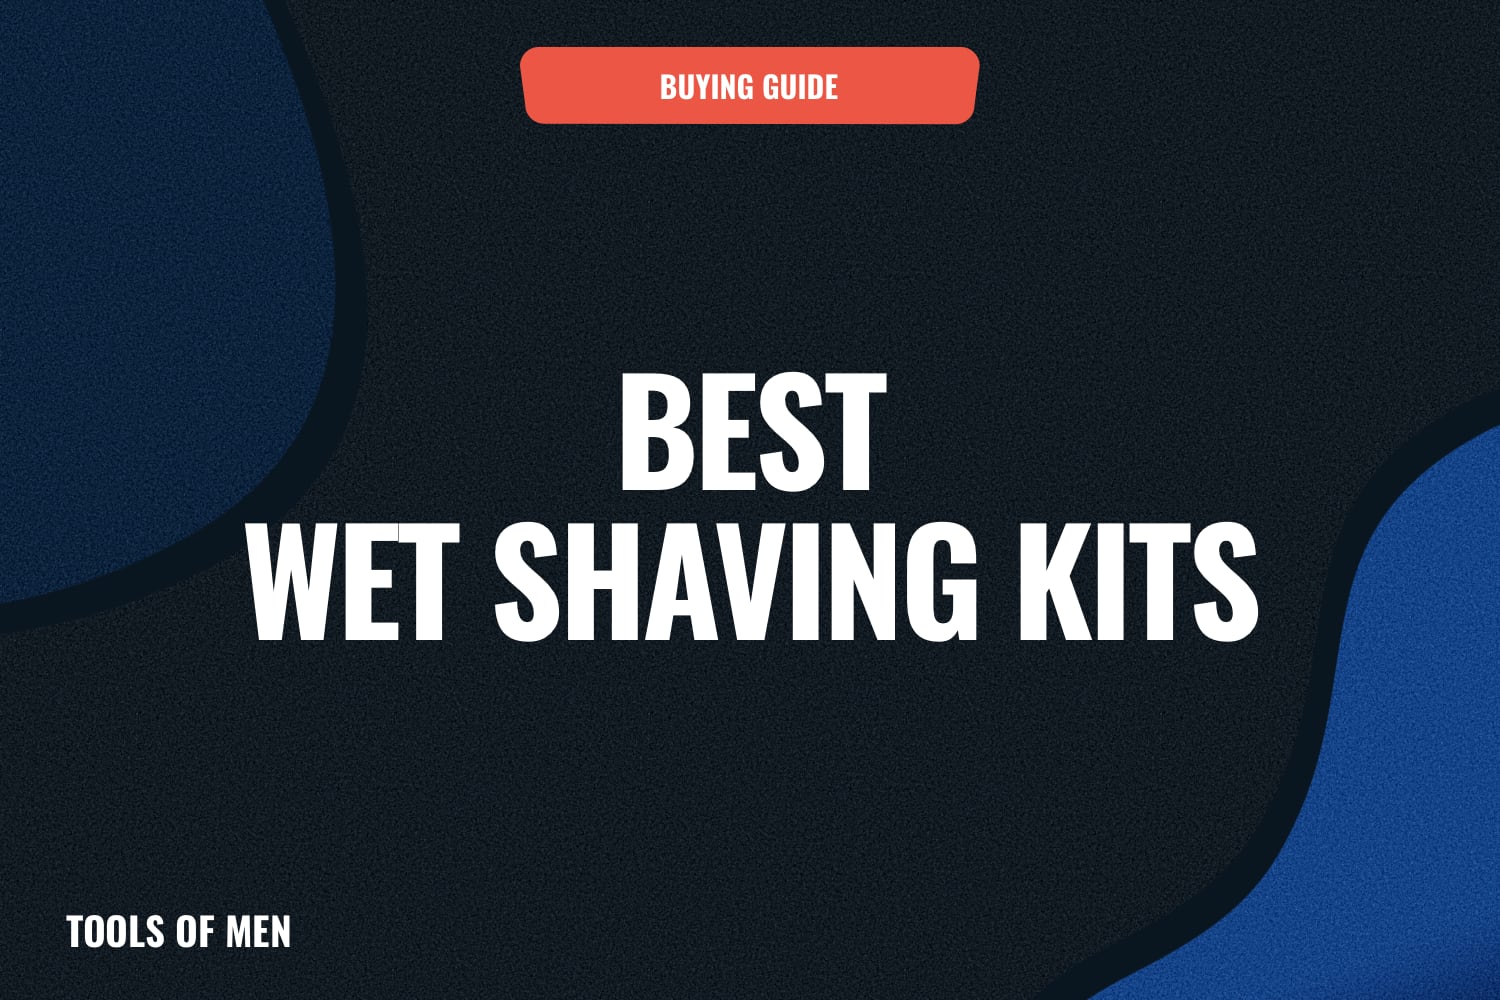 Best wet shaving kits feature image